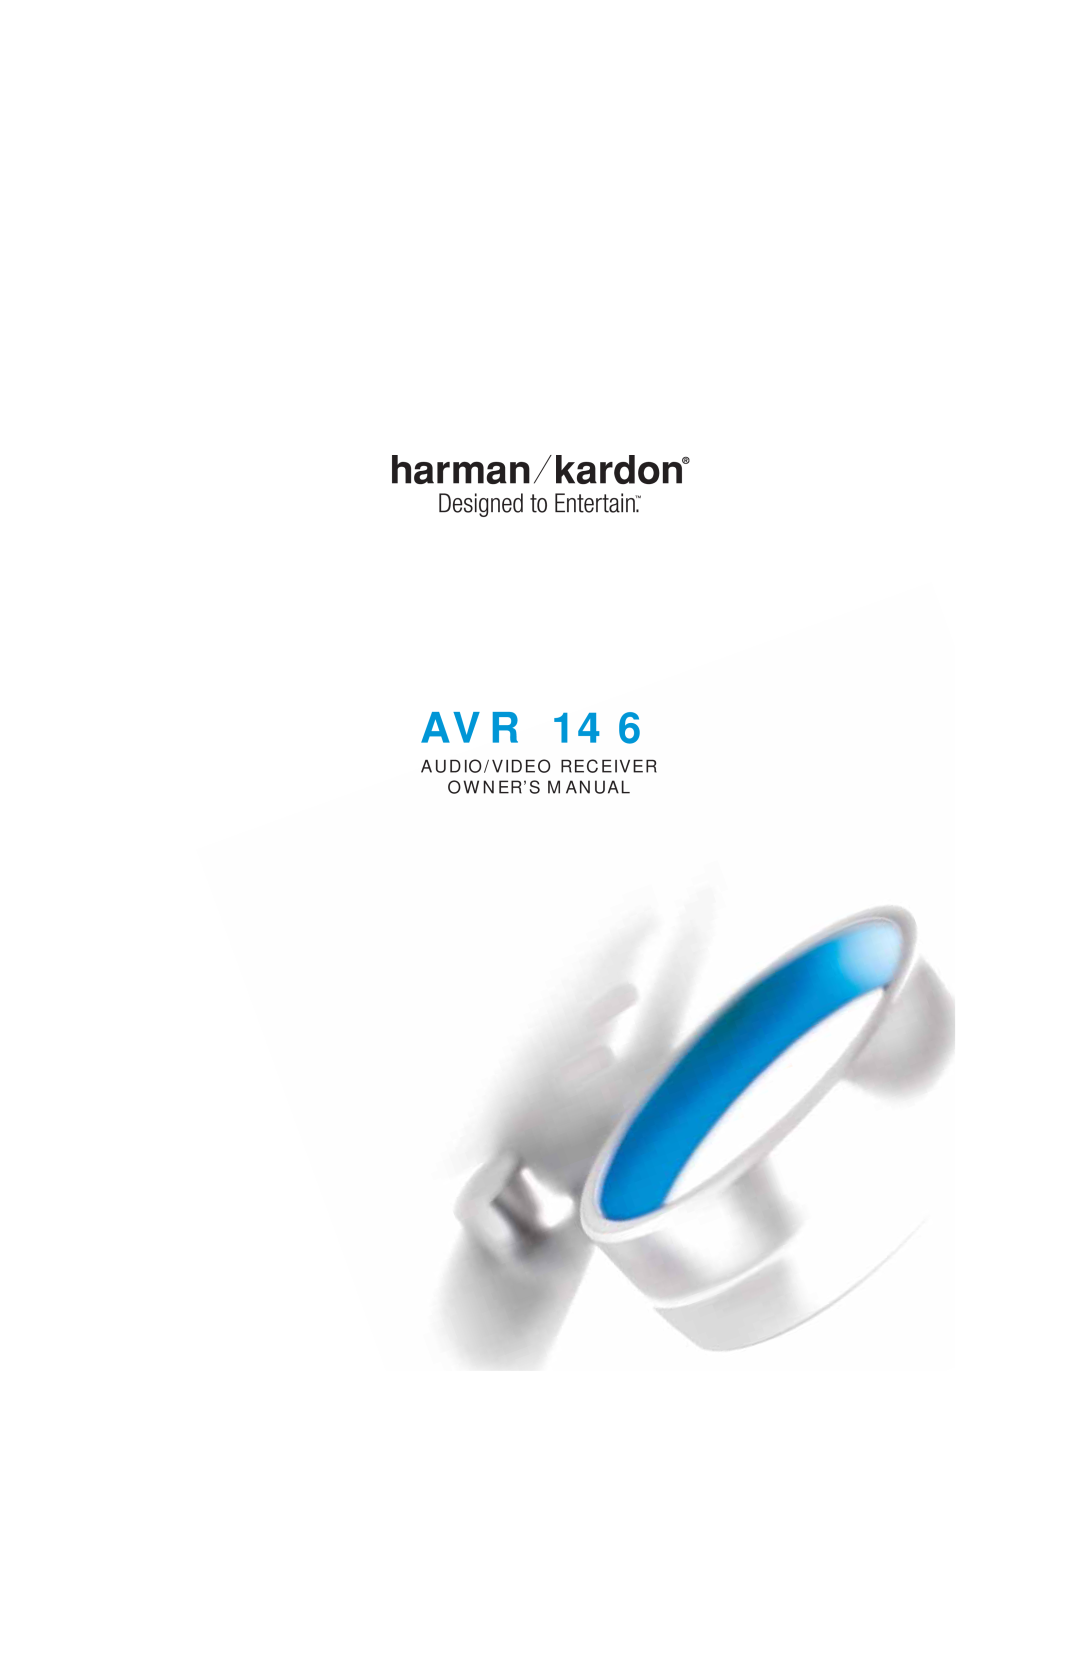 Harman-Kardon Universal Remote, 418 manual AVR 146 REMOTE CONTROL FUNCTIONS, IR Transmitter Lens, Program Indicator 